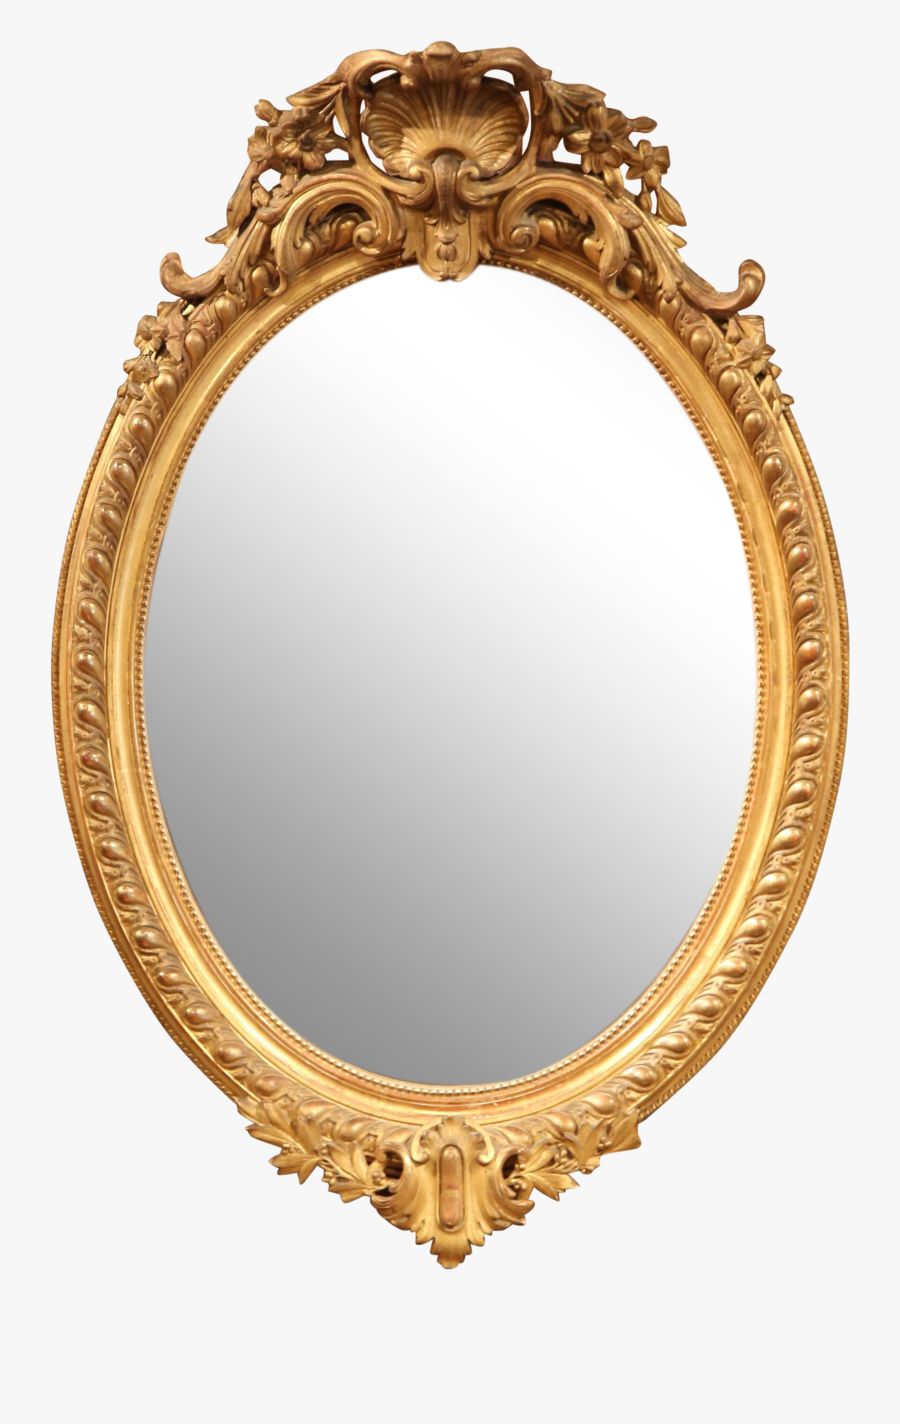 Transparent Mirror Clip Art - Oval Gold Leaf Mirror, Transparent Clipart